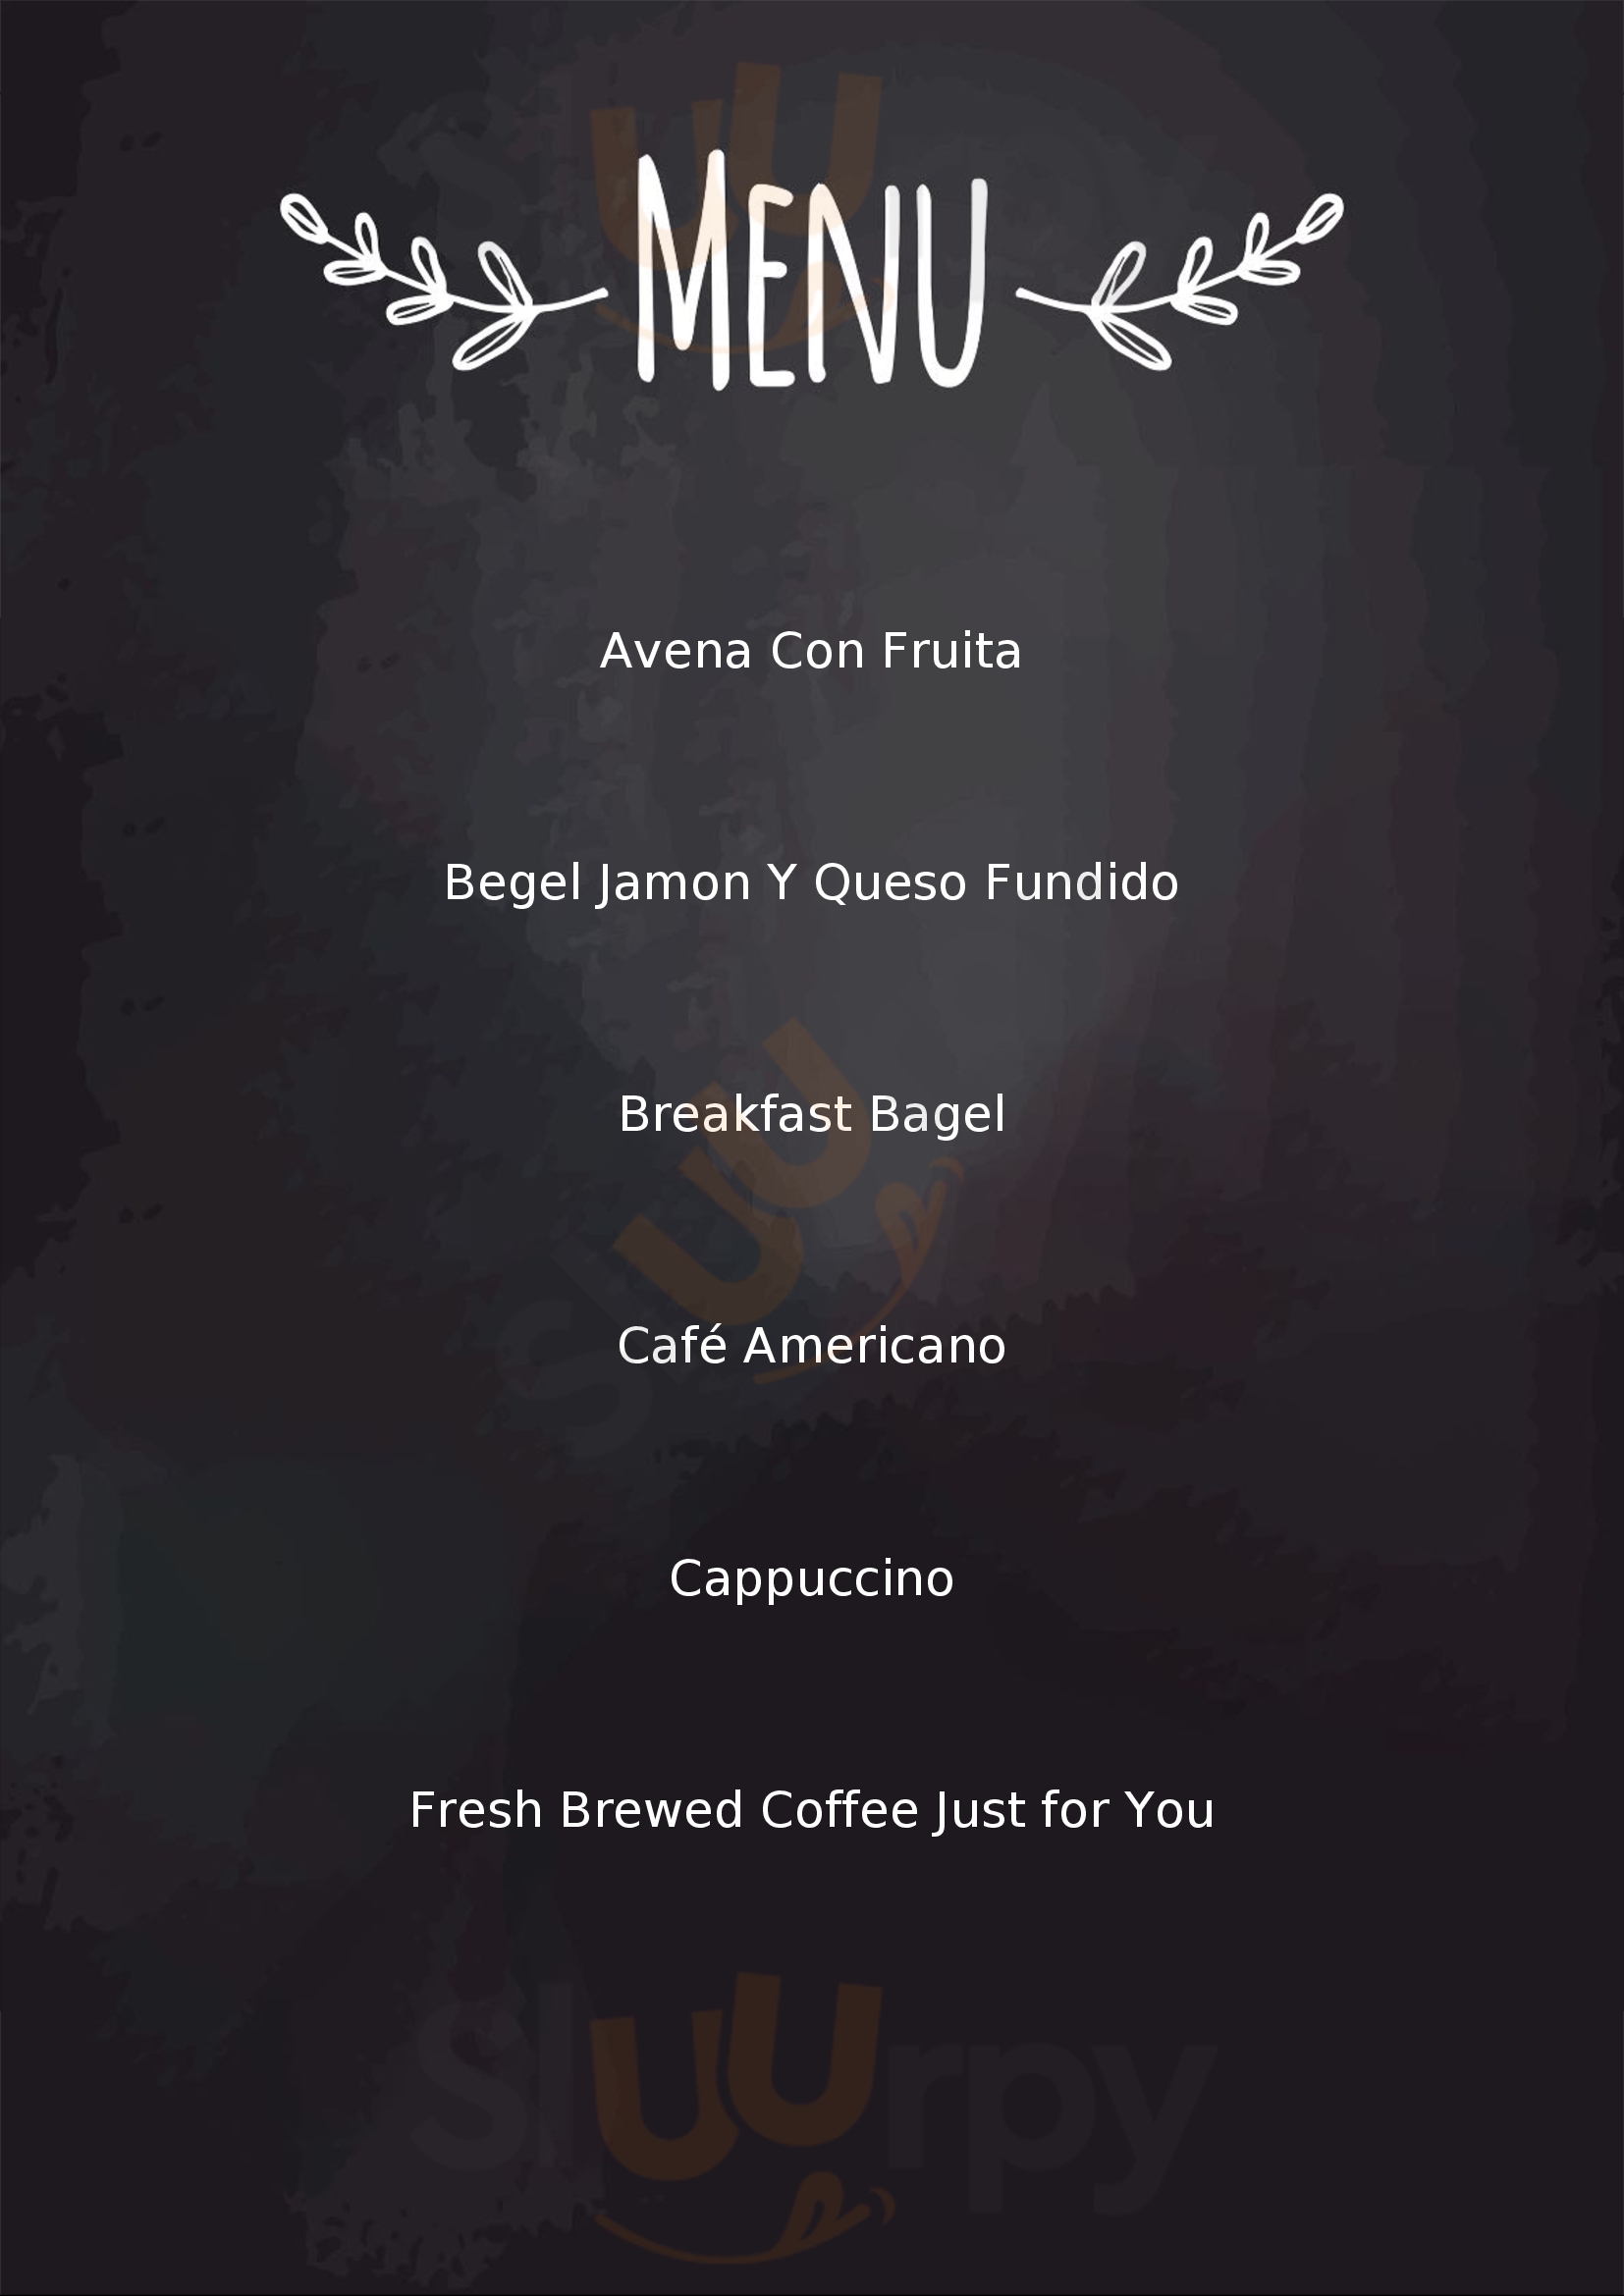 The Coffee Cup - Olas Altas Emiliano Zapata Menu - 1